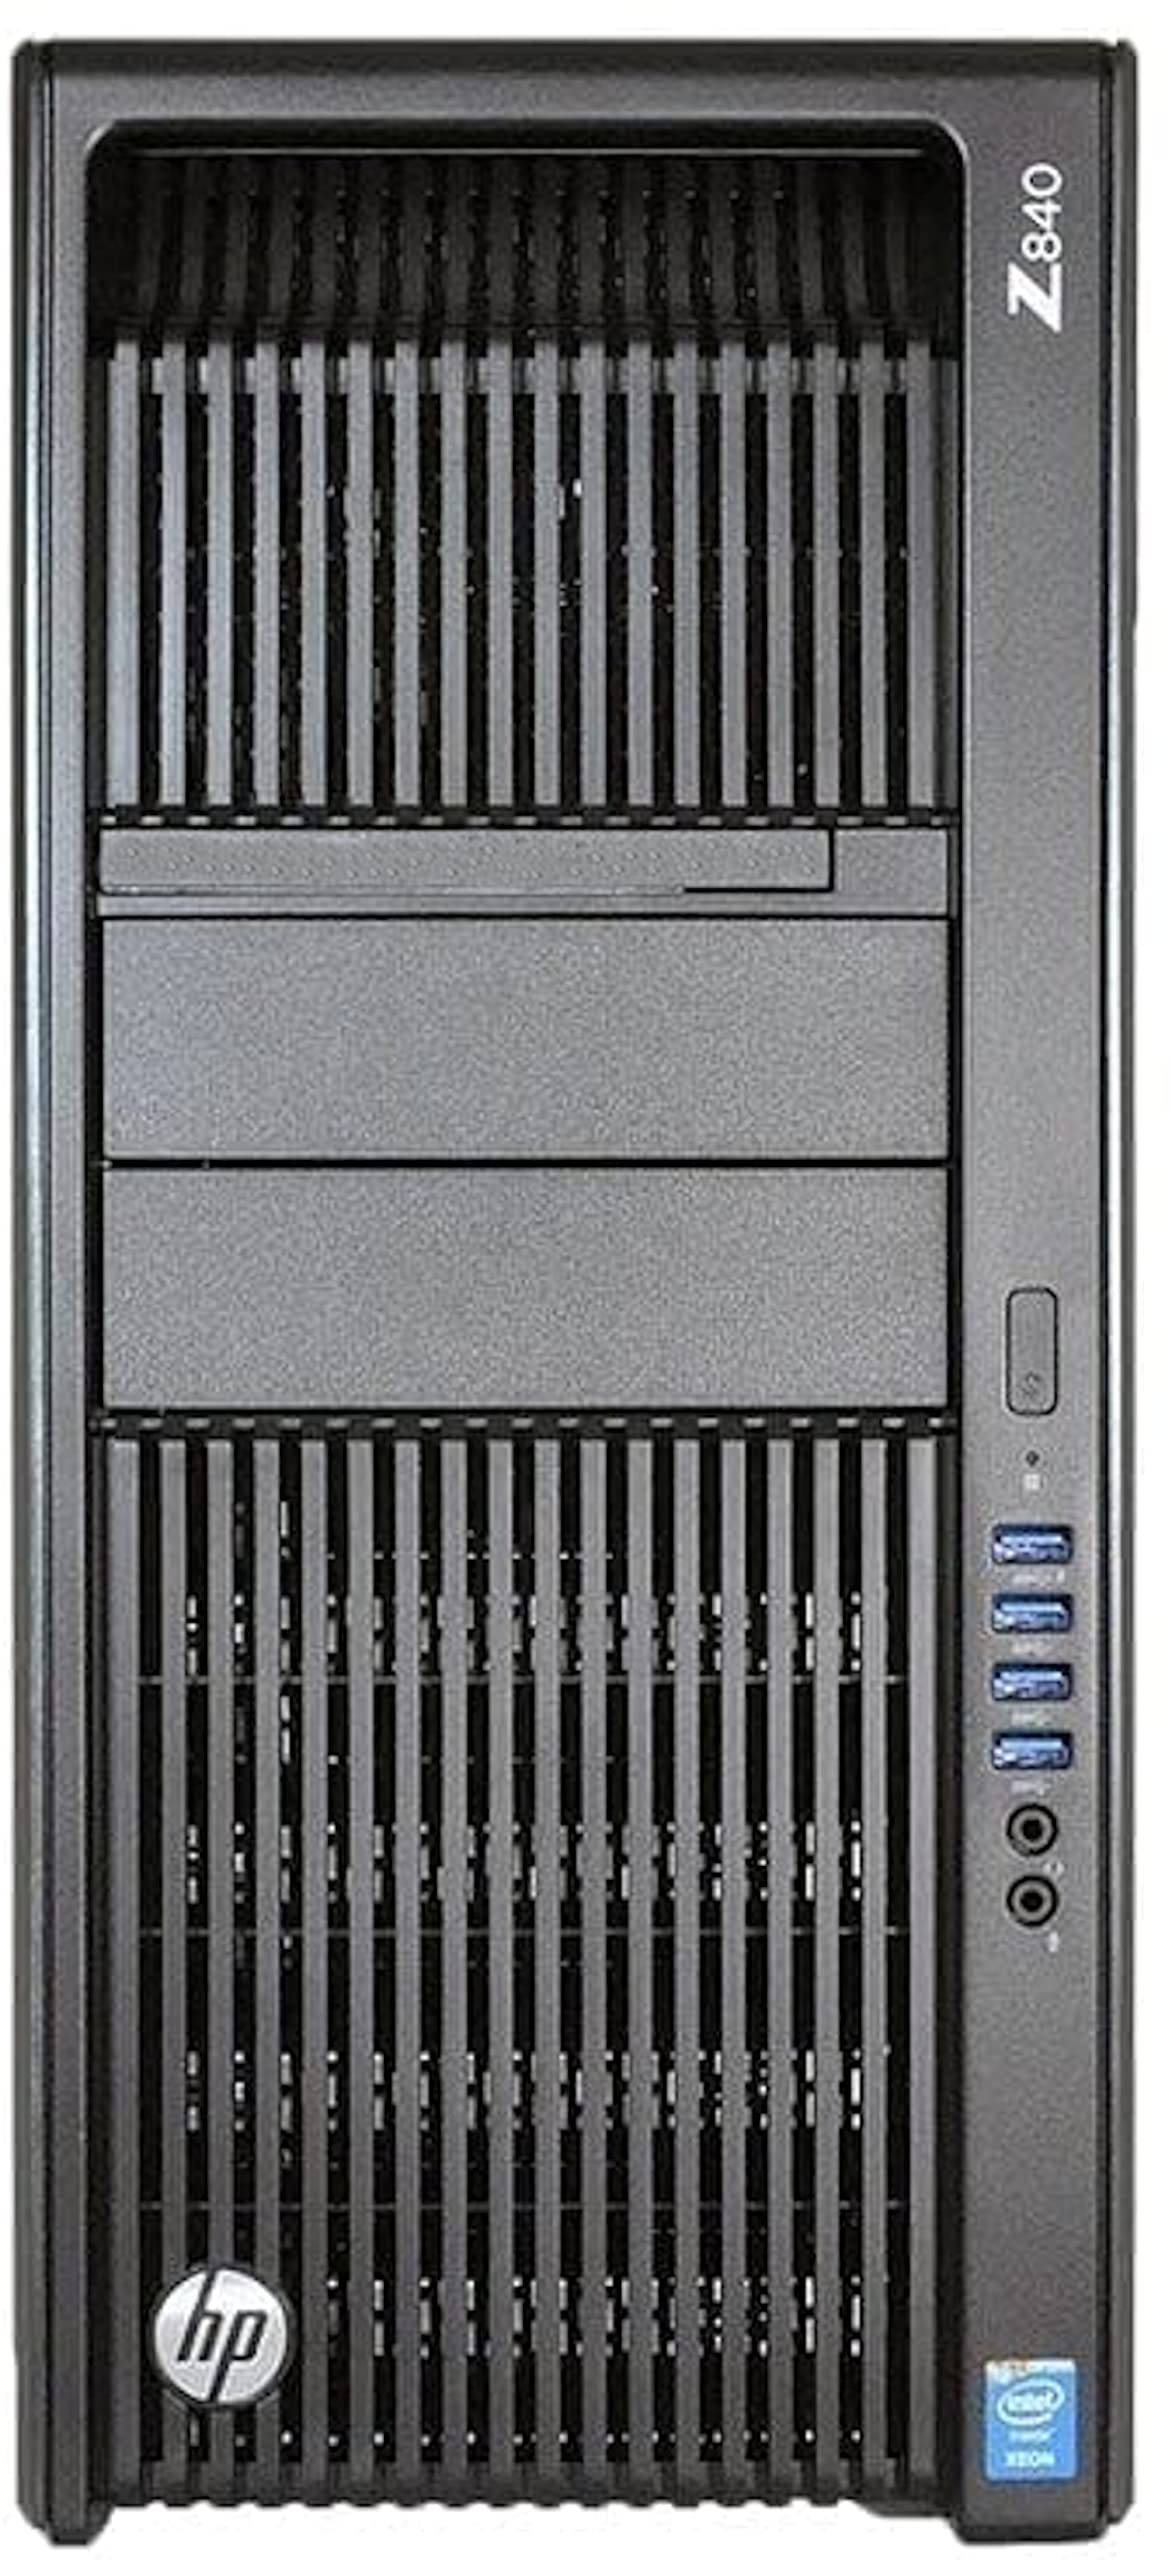 High End Z840 Workstation, 2X E5-2690 v4 up to 3.5GHz (28 Cores Total), 256GB RAM, 4X 1TB SSD, Quadro P4000 8GB (4X Display Port), USB 3.0, Windows 10 Professional 64-bit (Renewed)